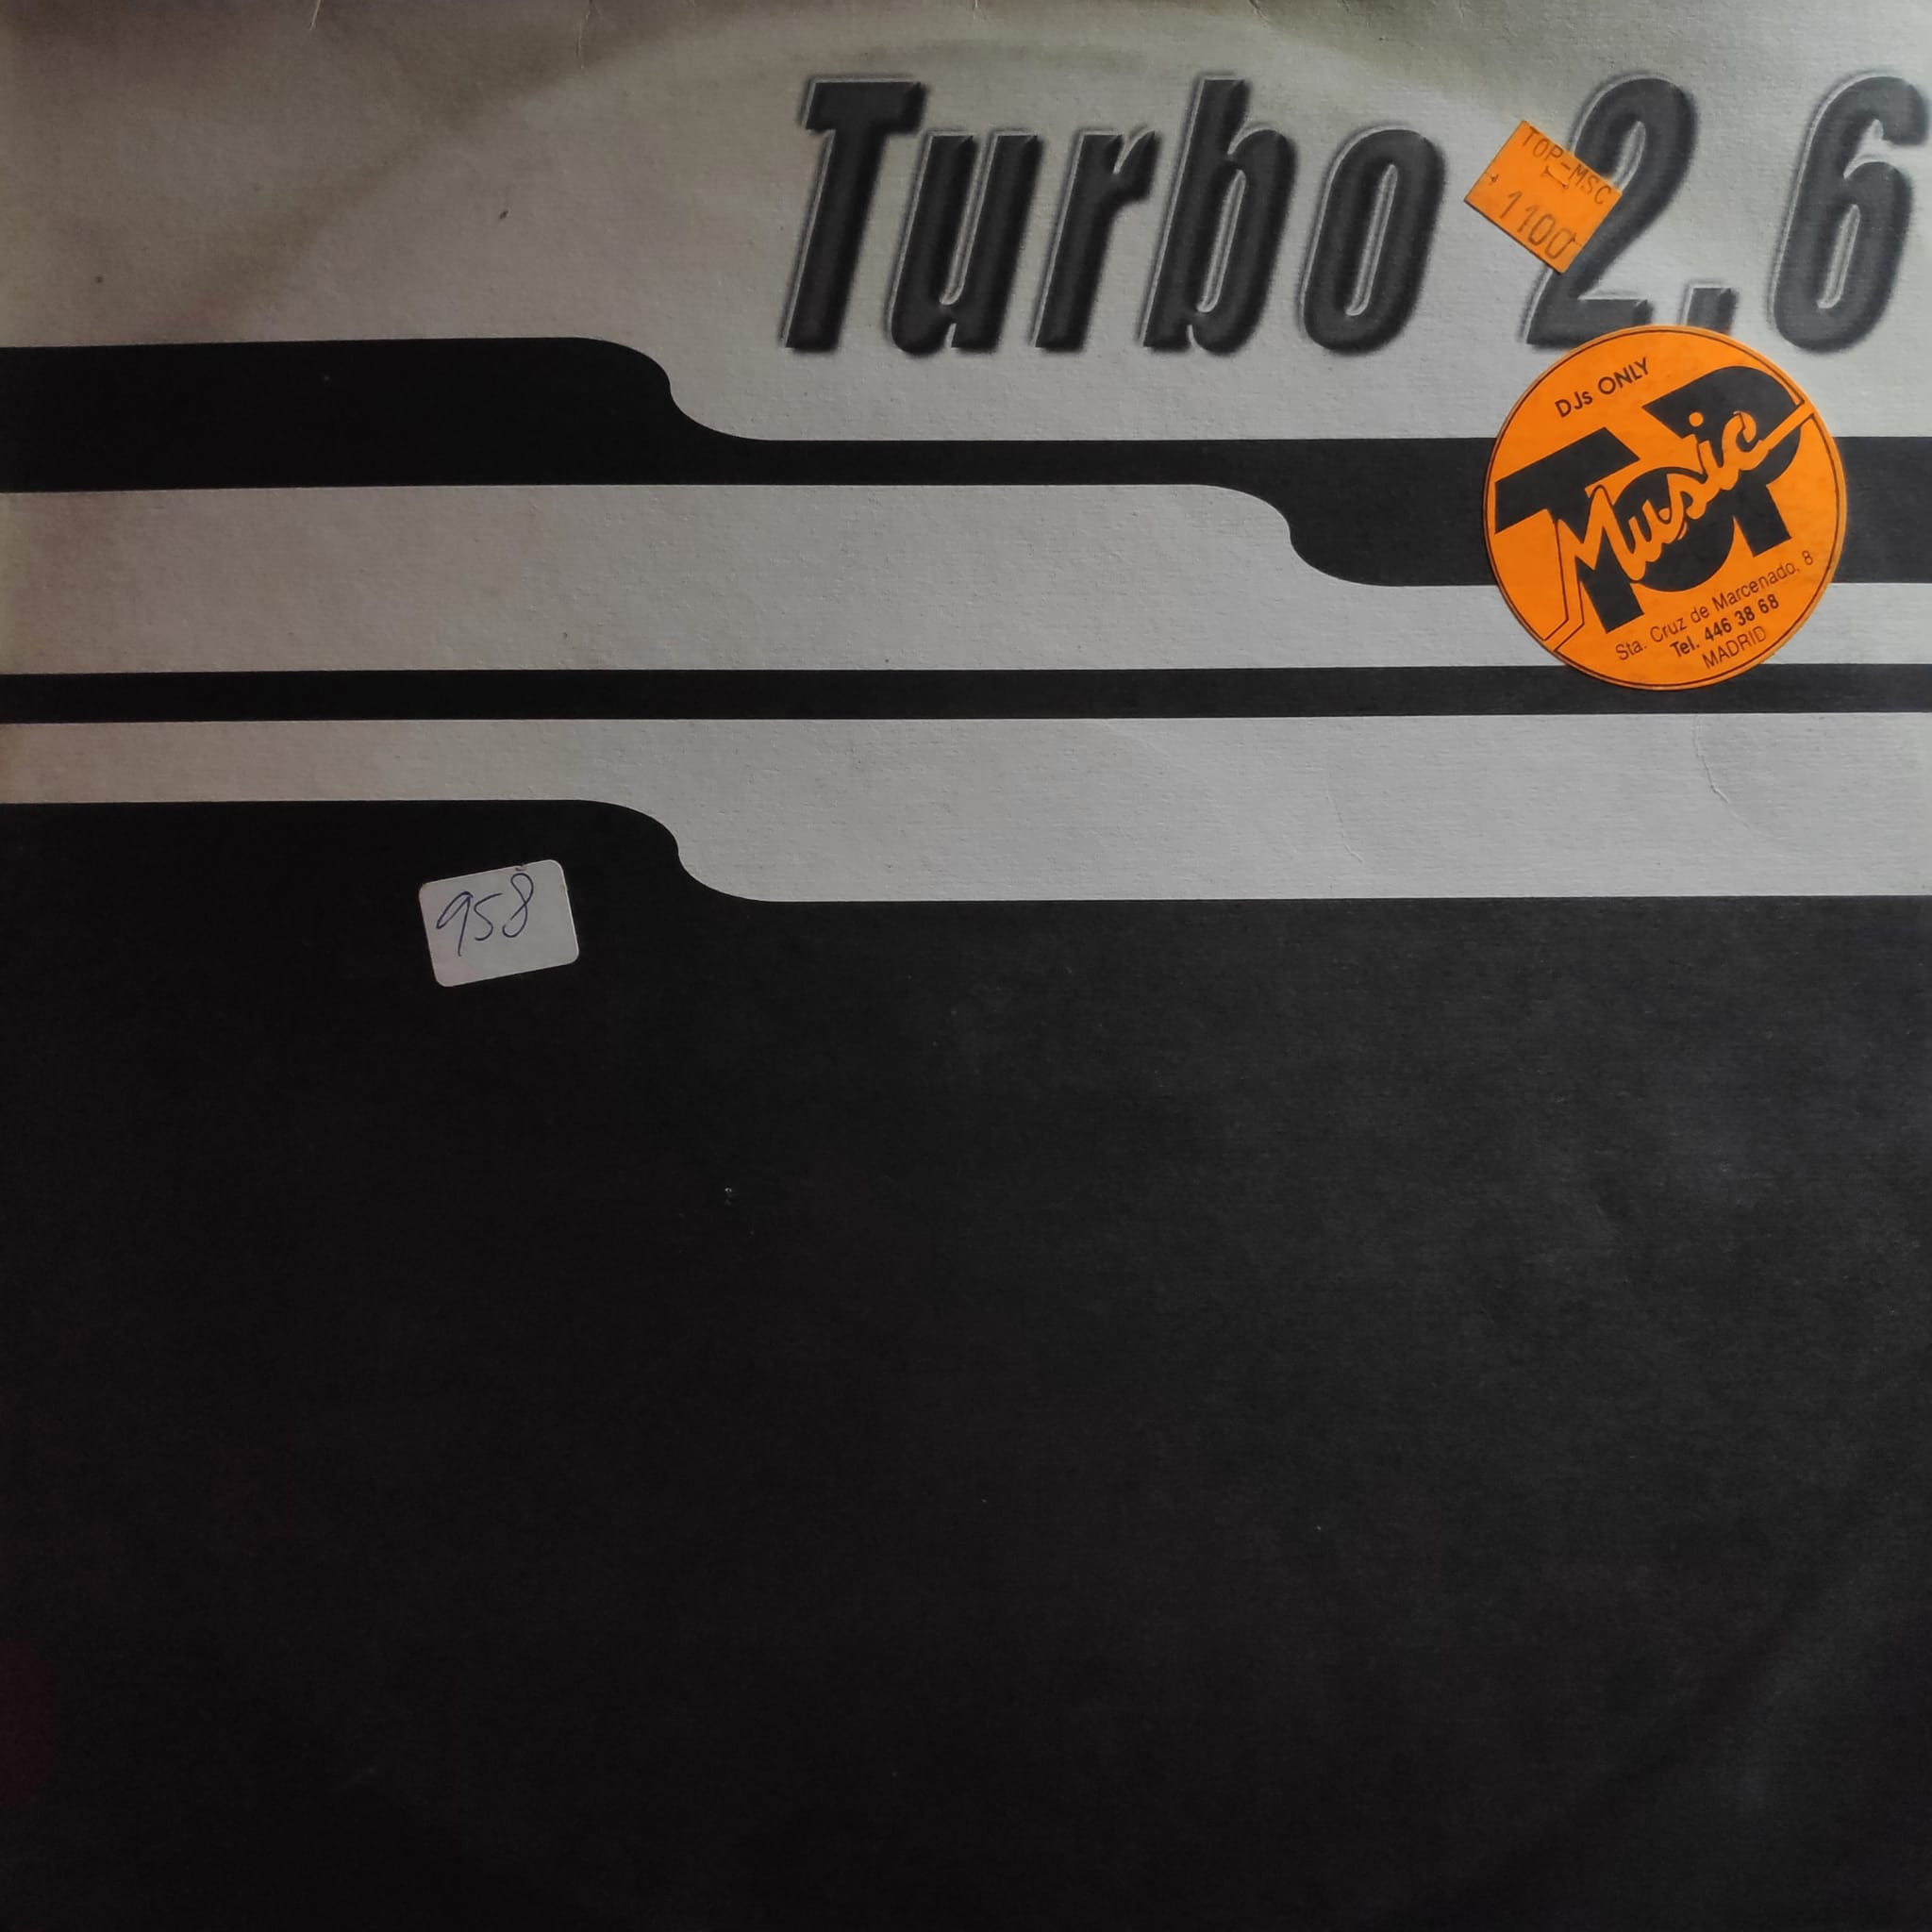 (29649) Turbo 2.6 ‎– Turbo 2.6